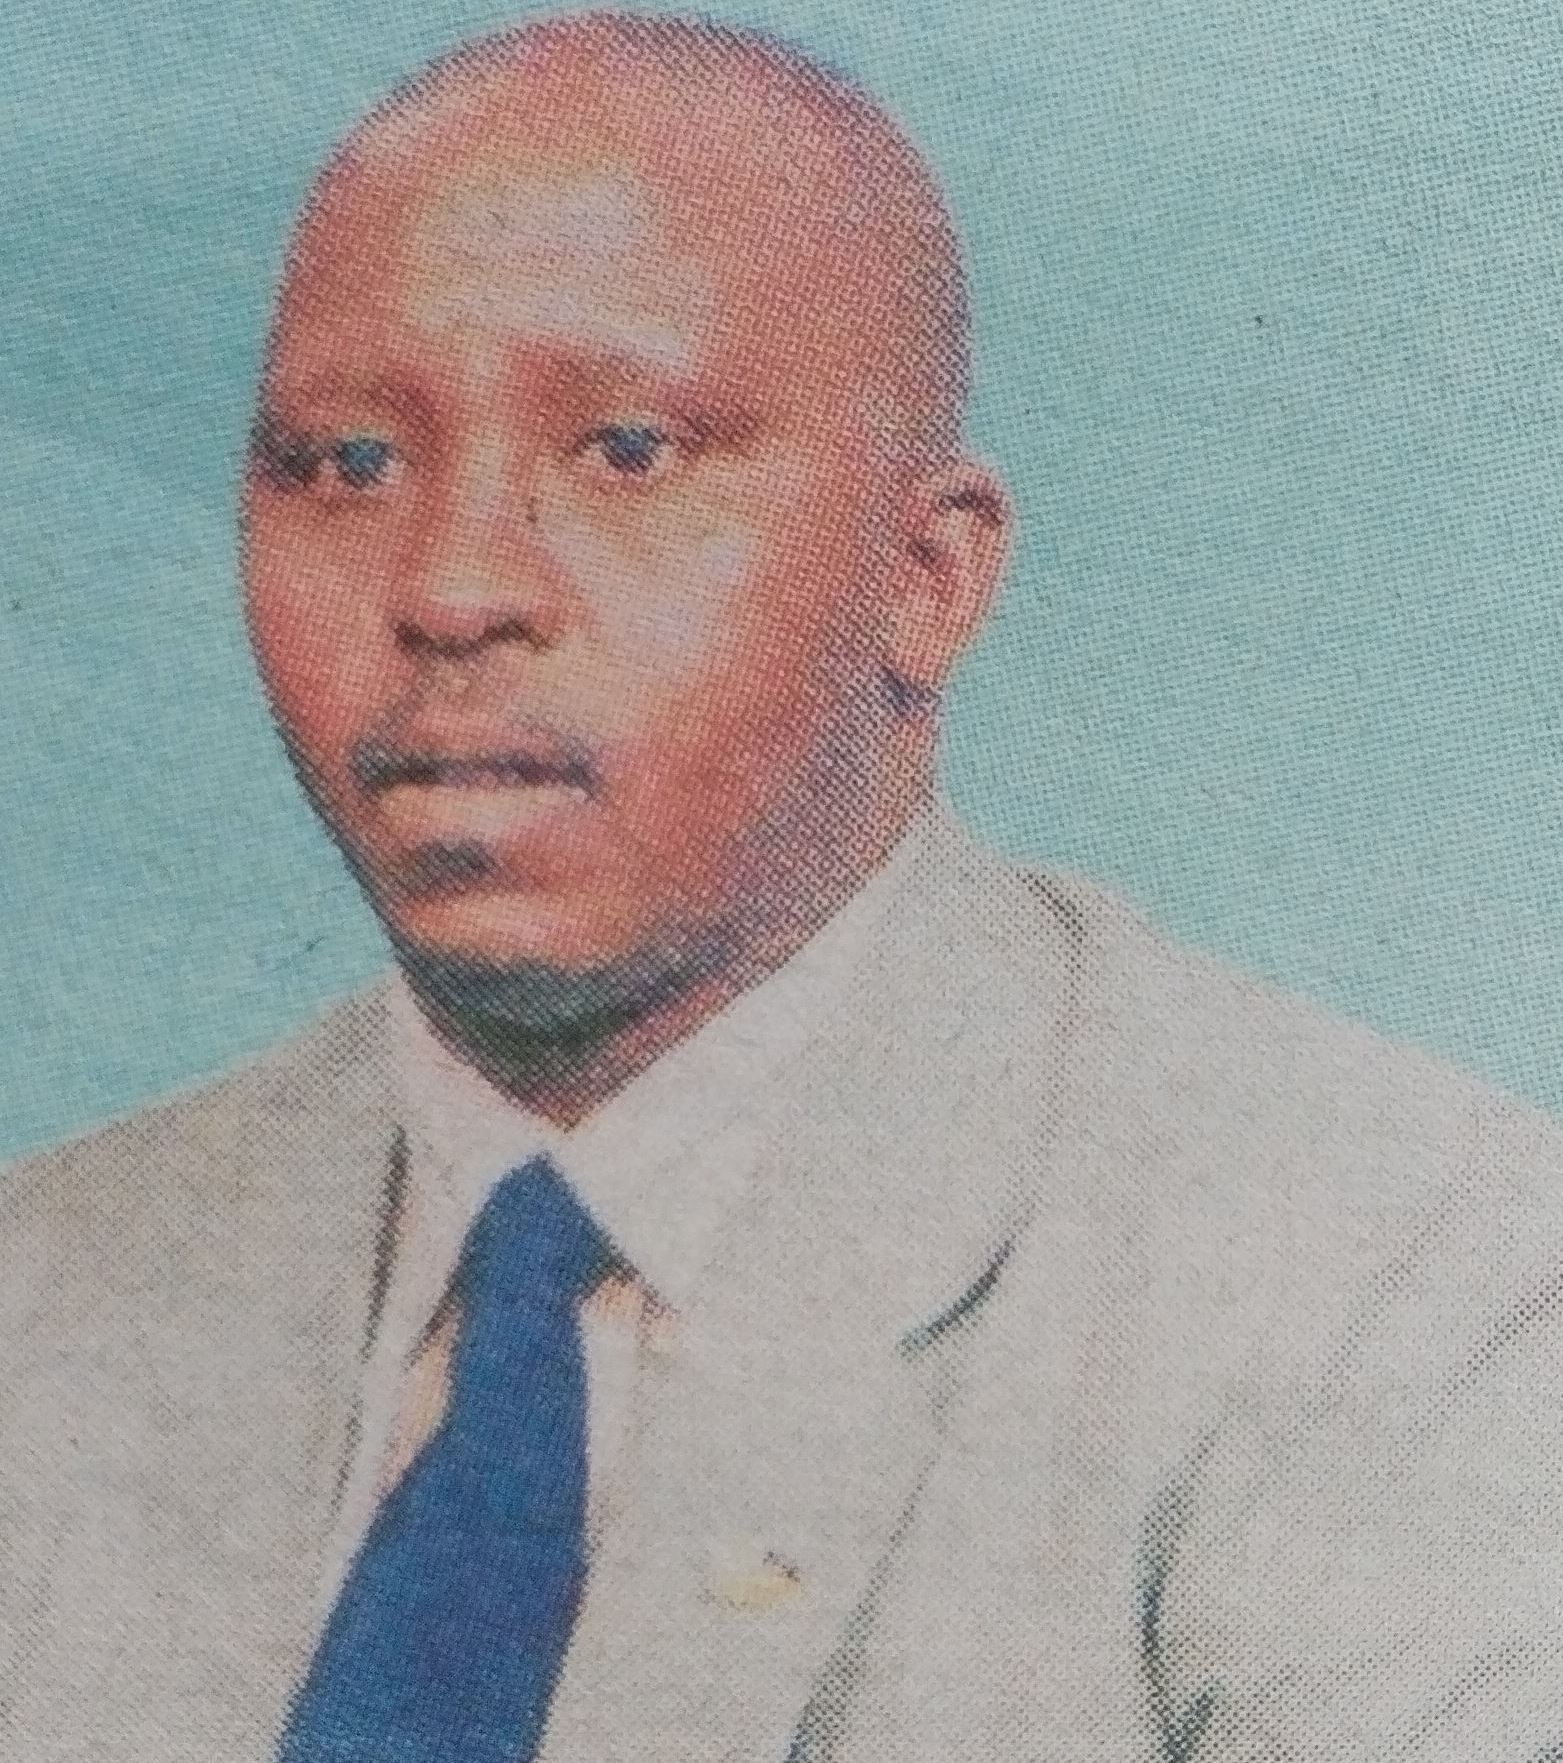 Obituary Image of Bernard Chege Kabue